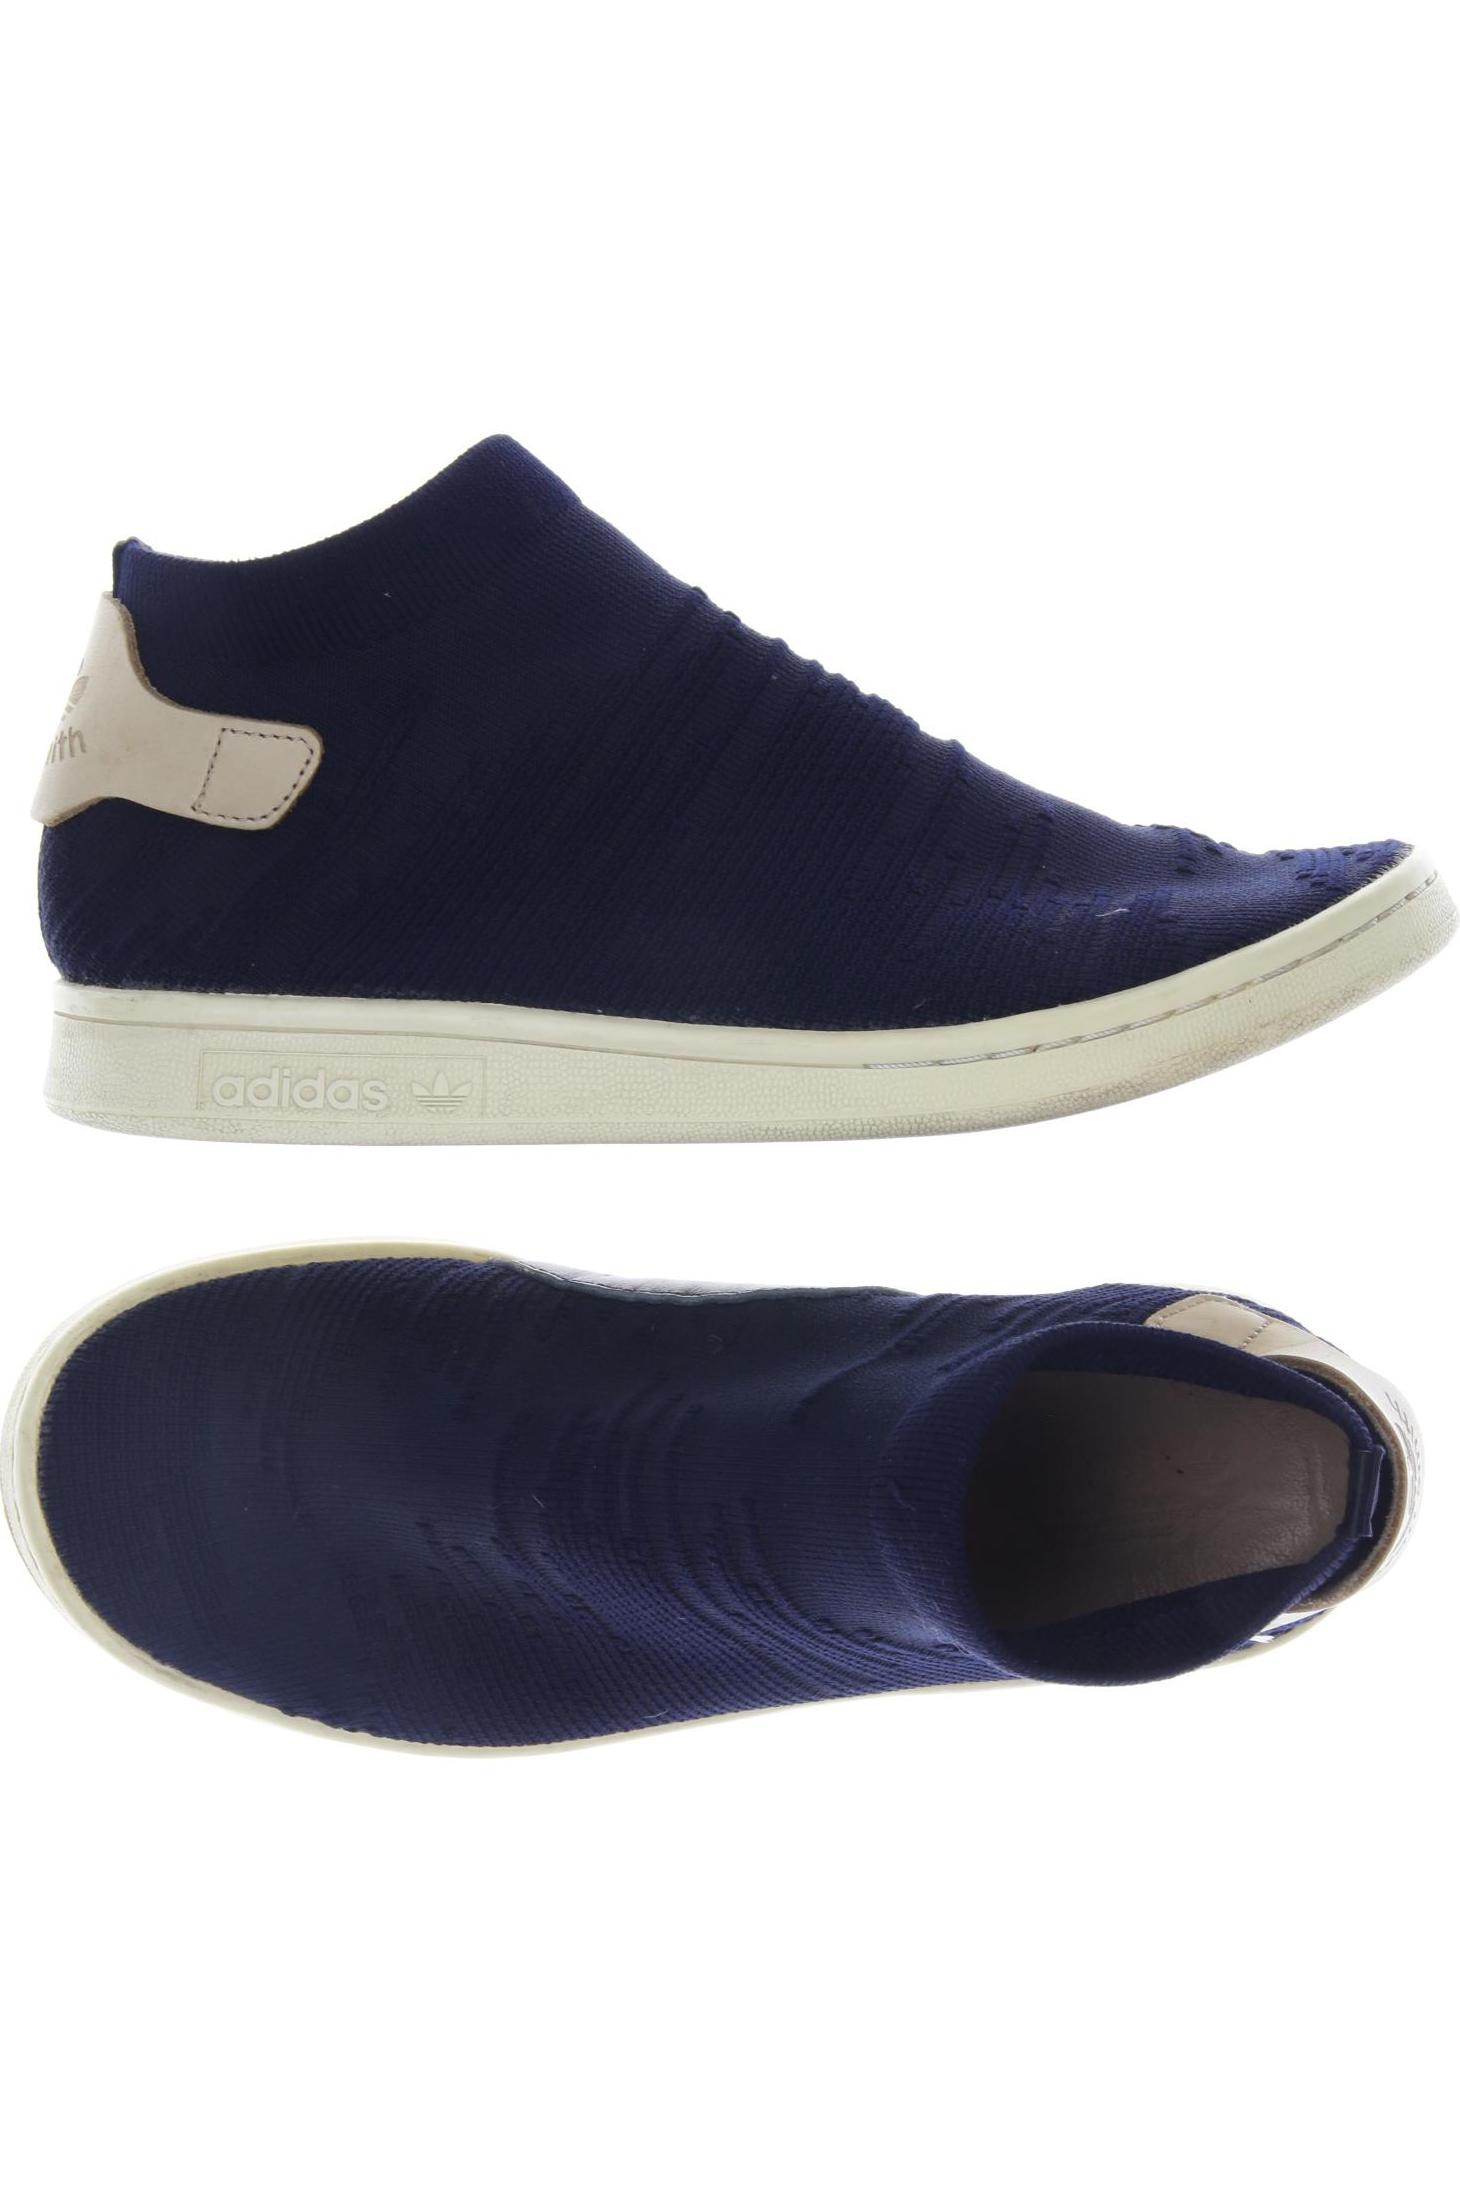 adidas Originals Damen Sneakers, marineblau, Gr. 5.5 von adidas Originals